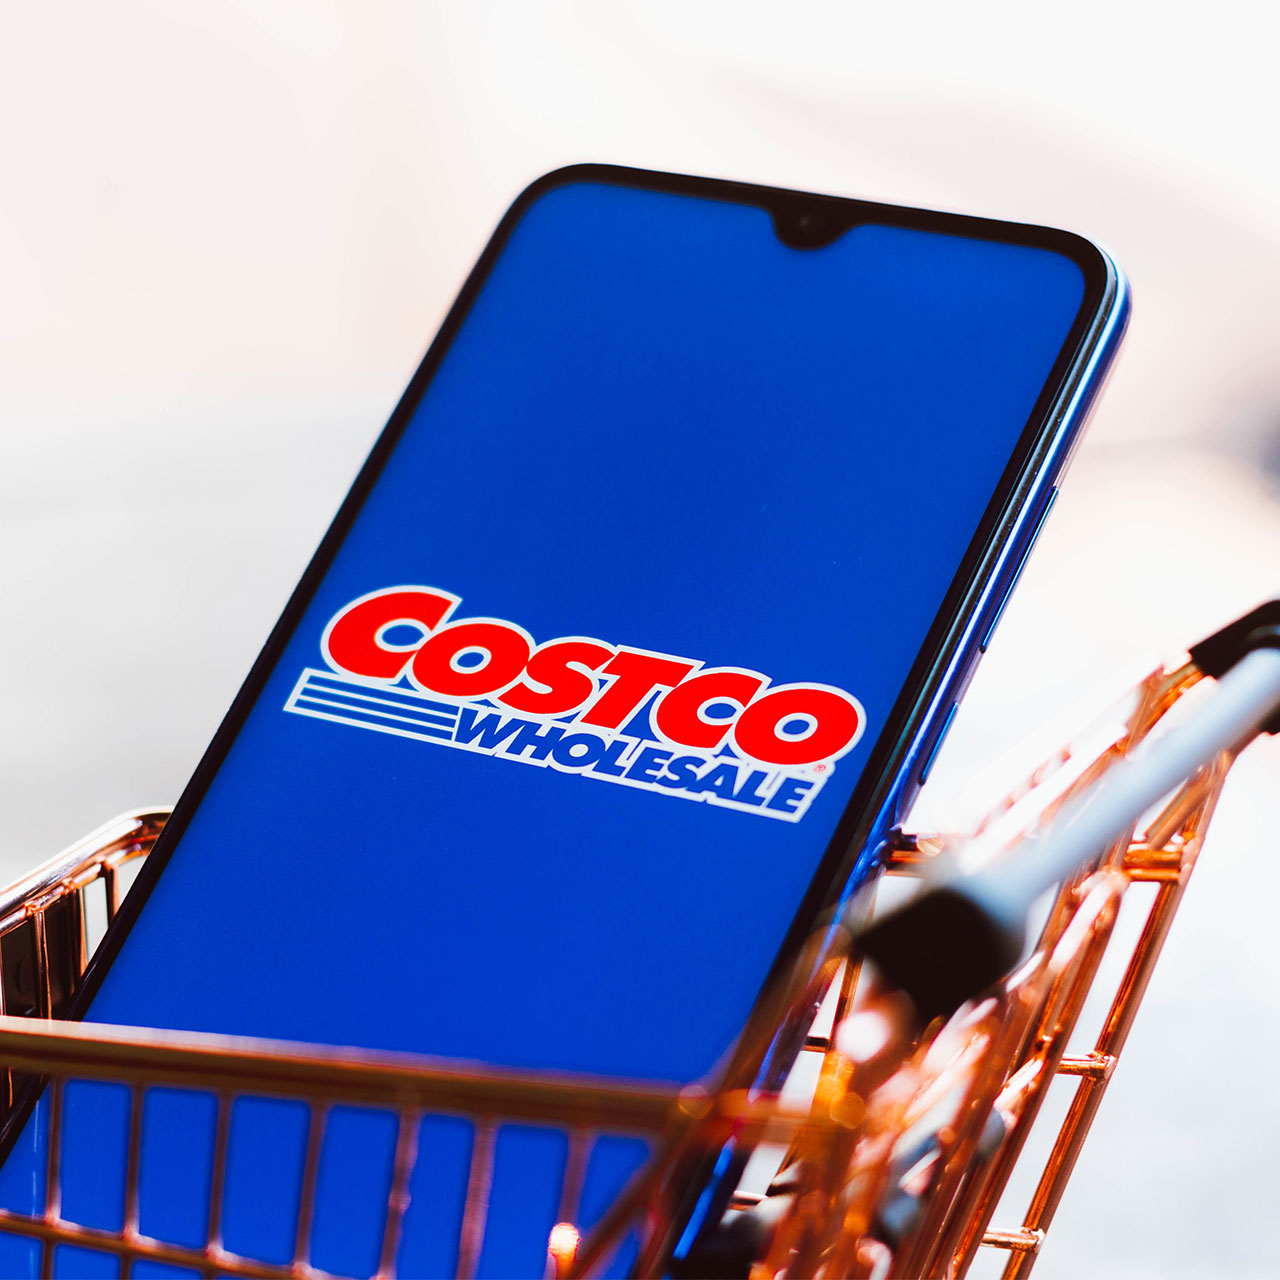 costco app on iphone in mini shopping cart